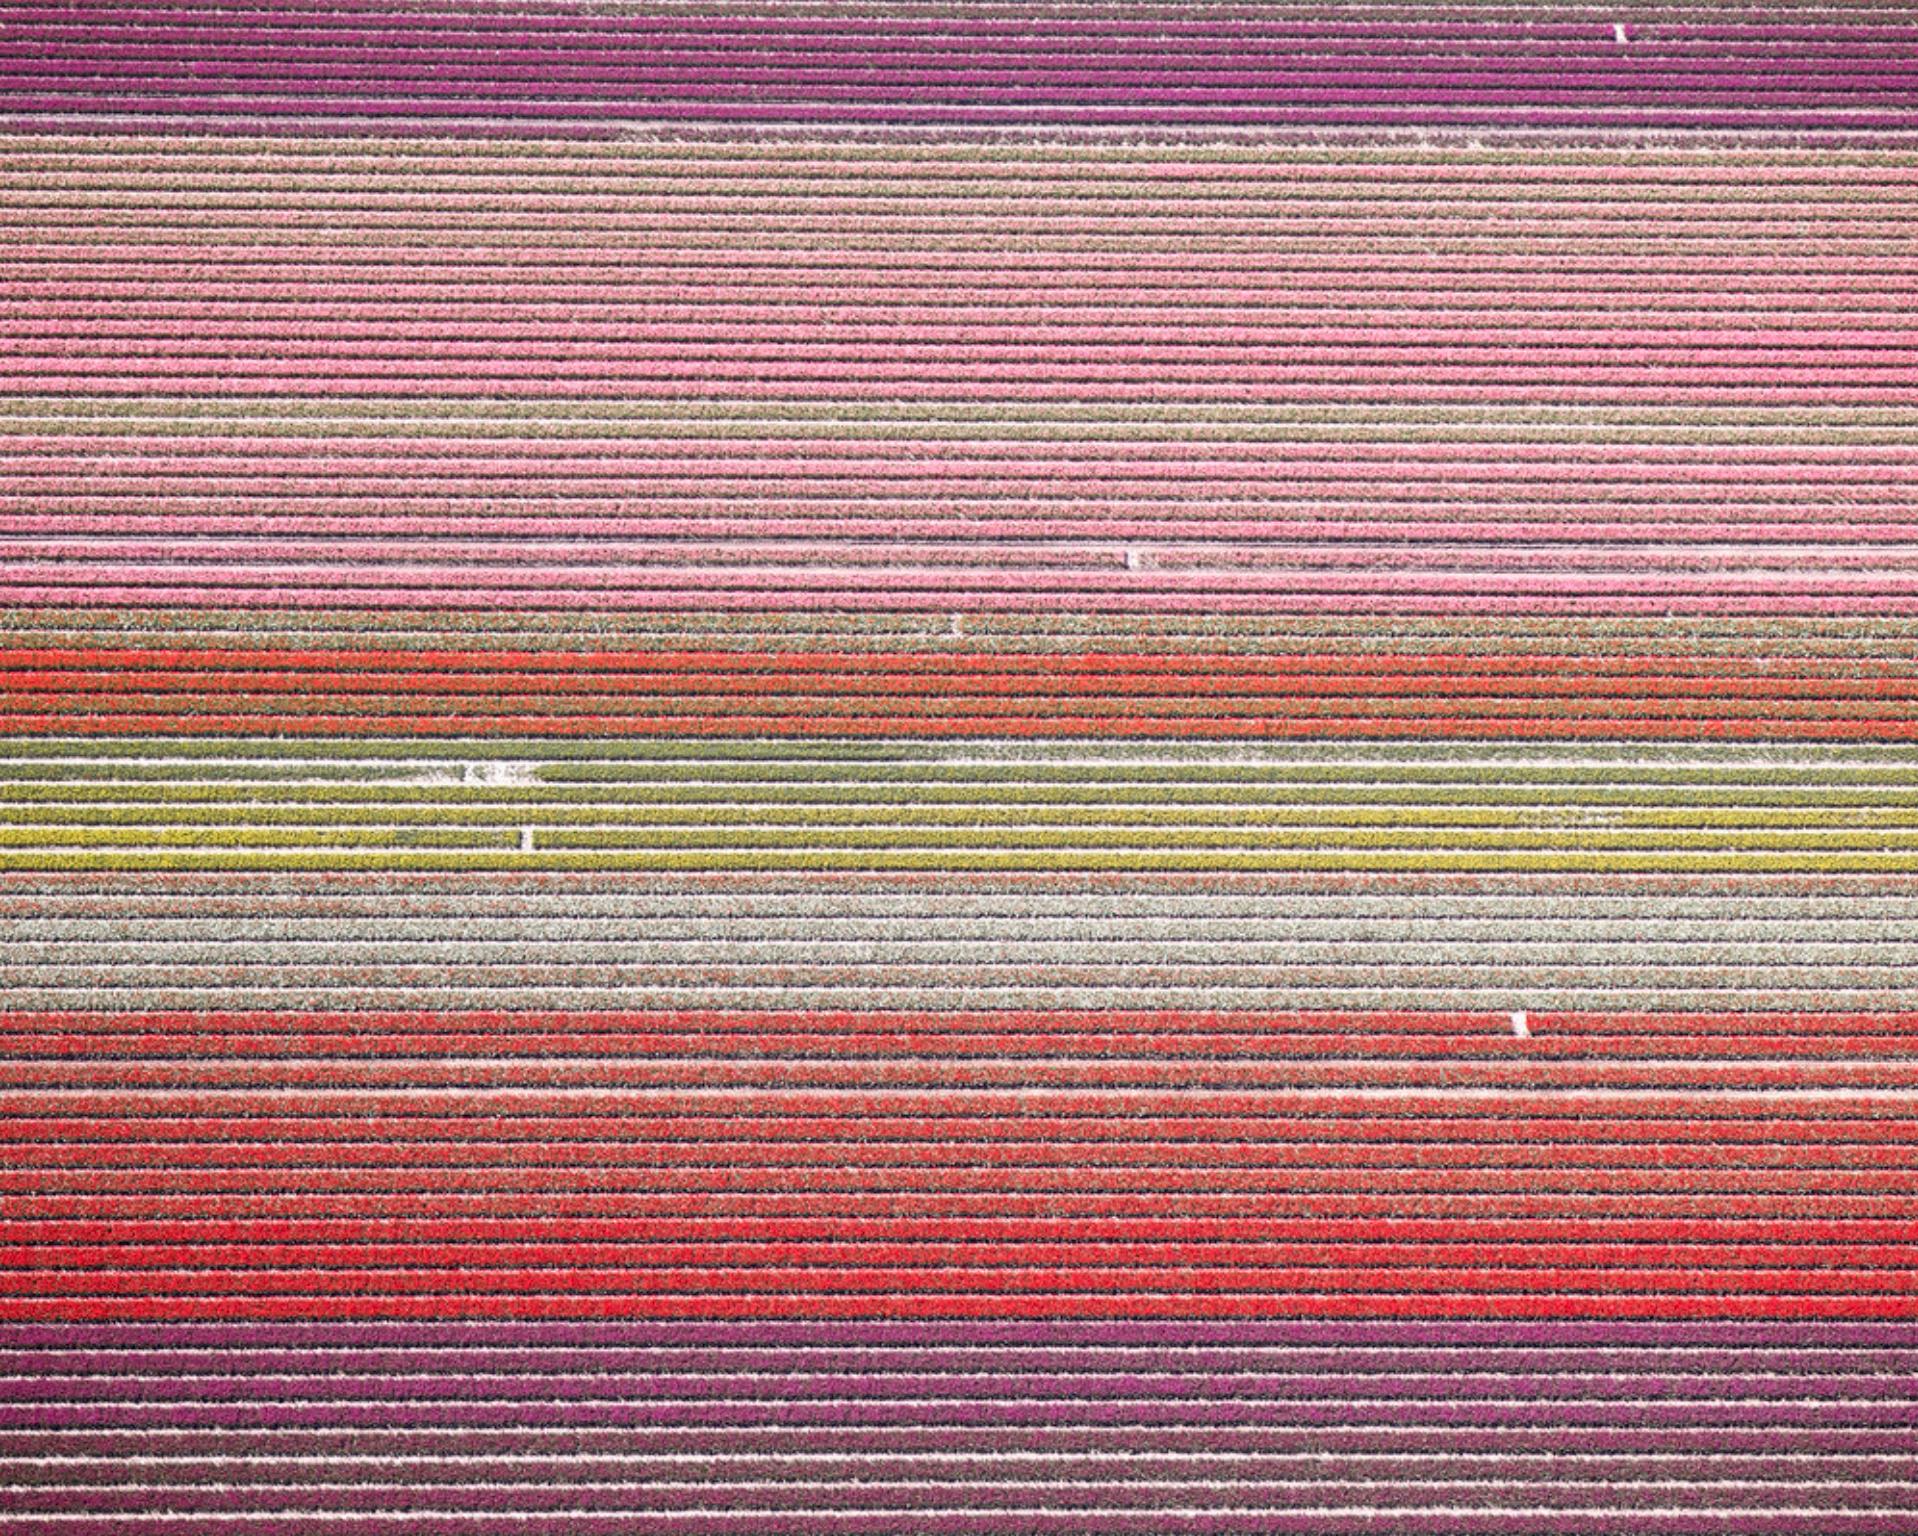 David Burdeny - (Veld 11) Tulips 11, Noordoostpolder, 2016, Printed After